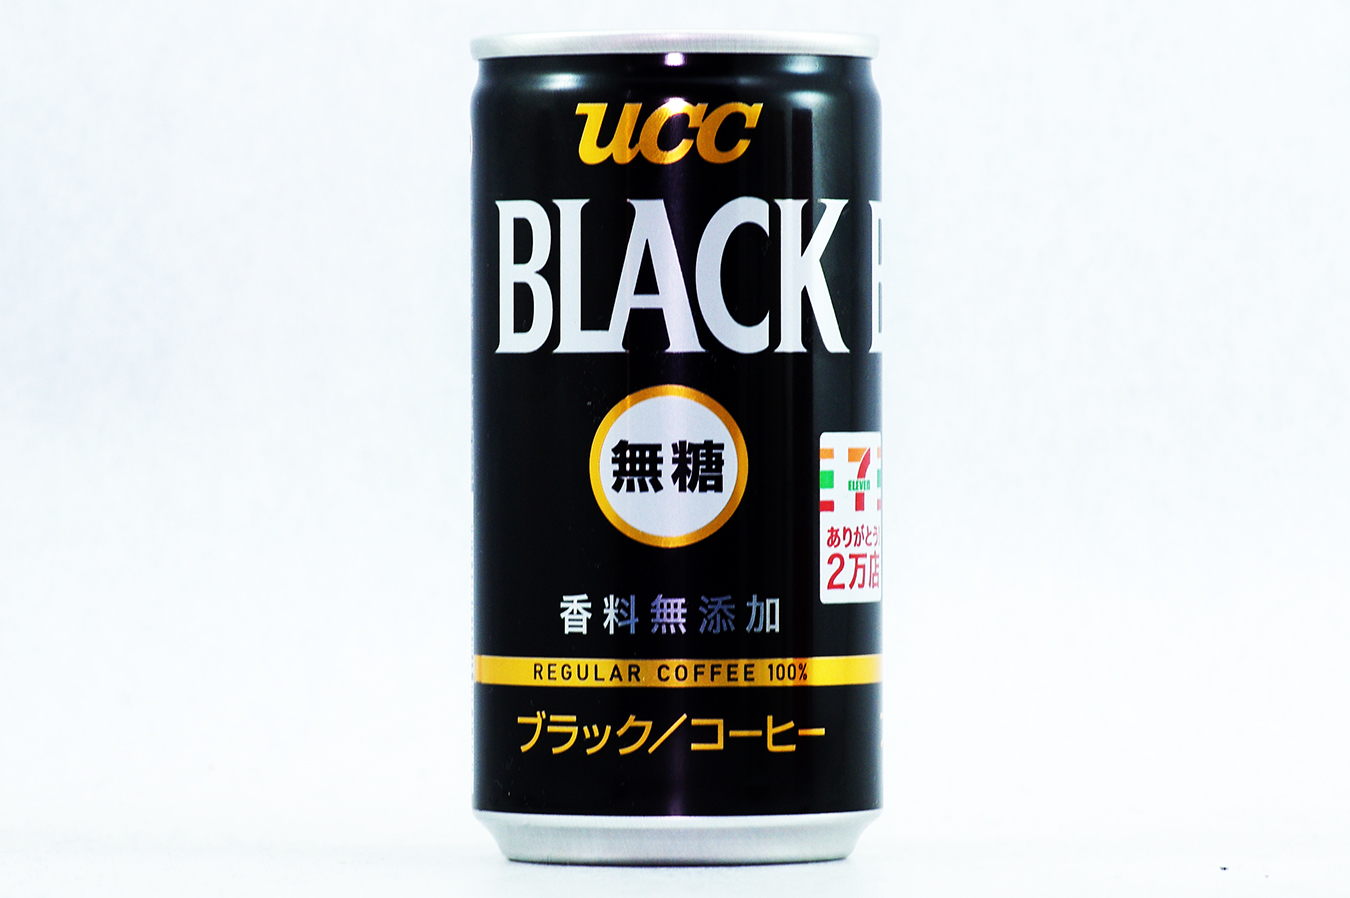 UCC ブラック無糖 セブンイレブン2万店達成記念缶 2018年3月